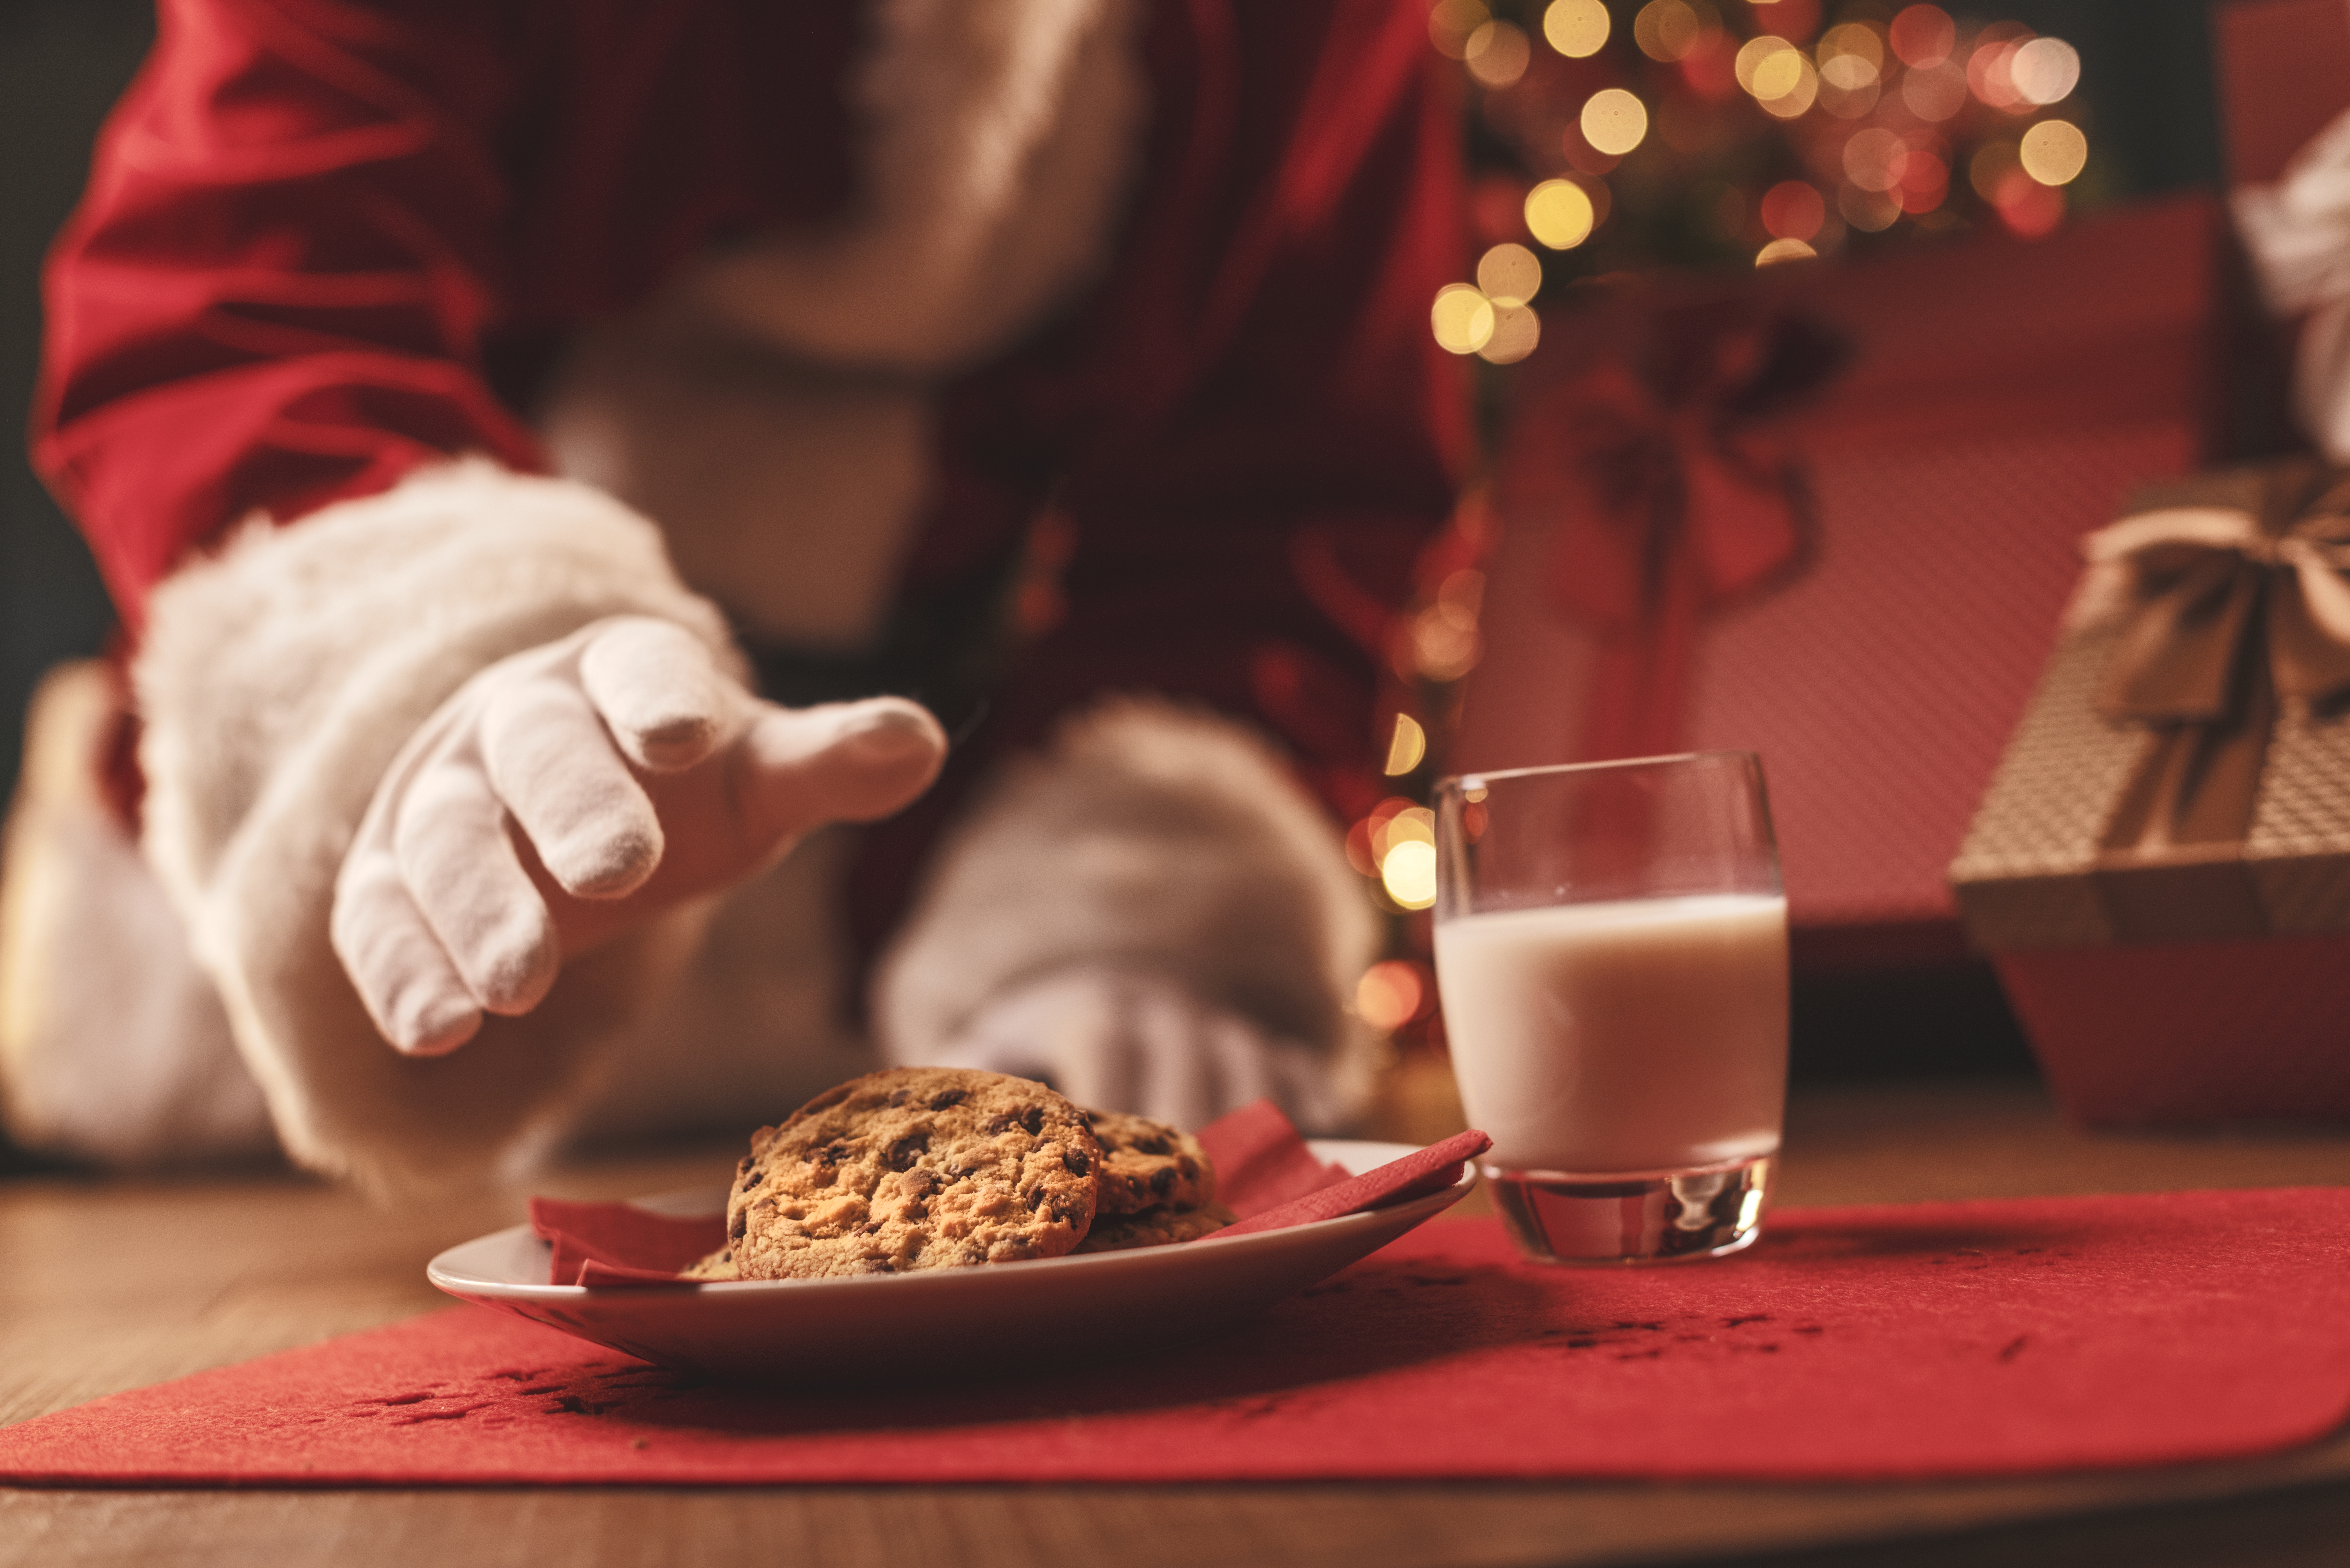 Santa | Source: Shutterstock